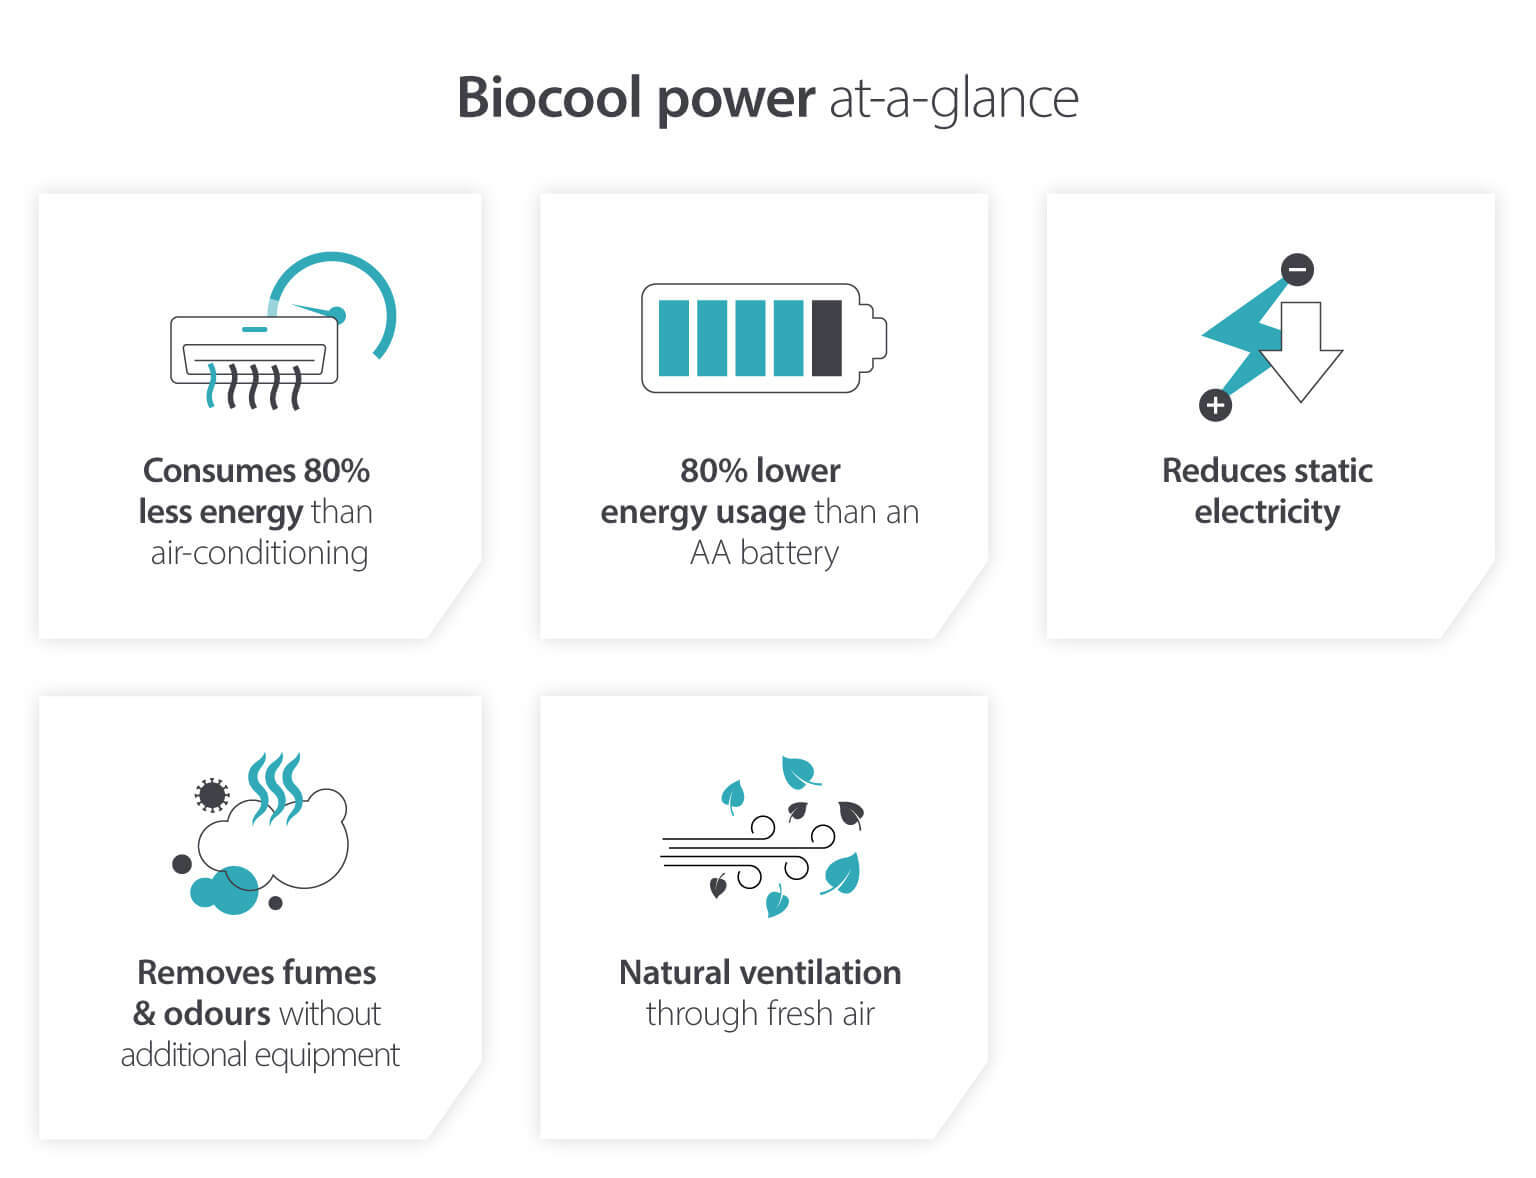 Biocool power at a glance